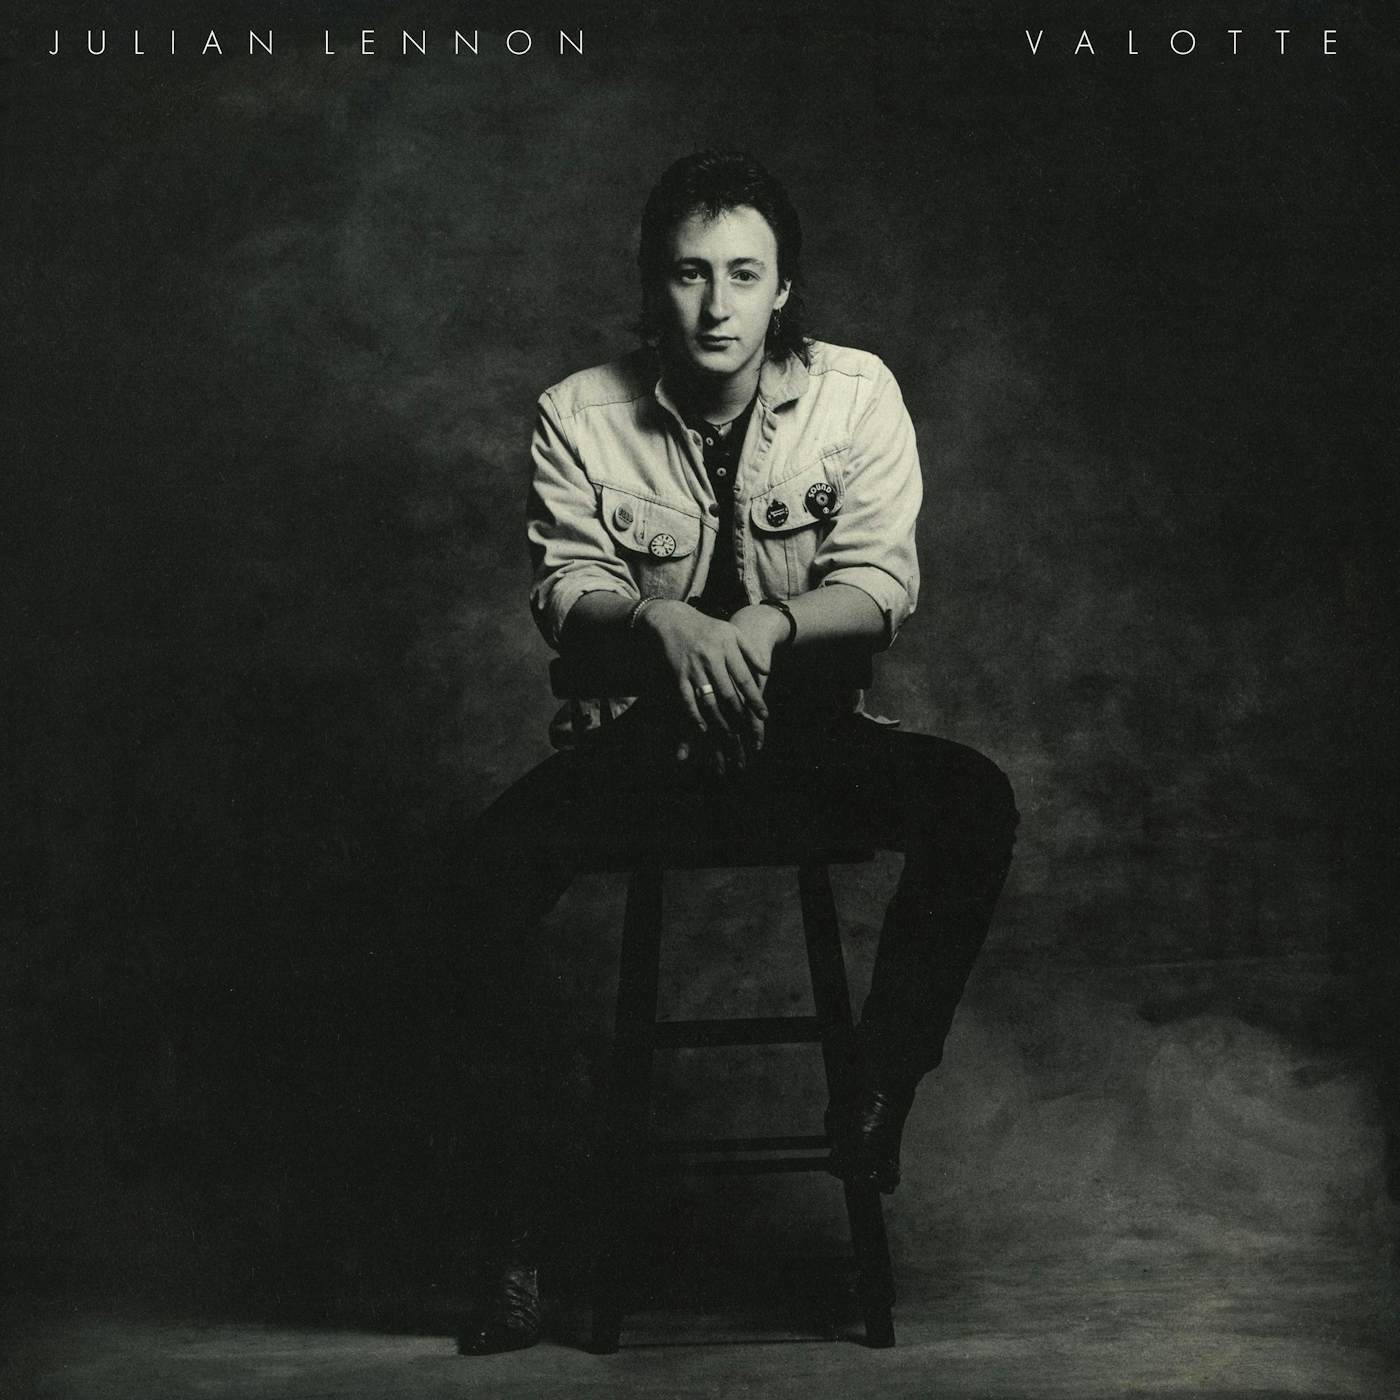 Julian Lennon VALOTTE (180G/TURQUOISE VINYL/LIMITED/ANNIVERSARY EDITION/GATEFOLD COVER) Vinyl Record